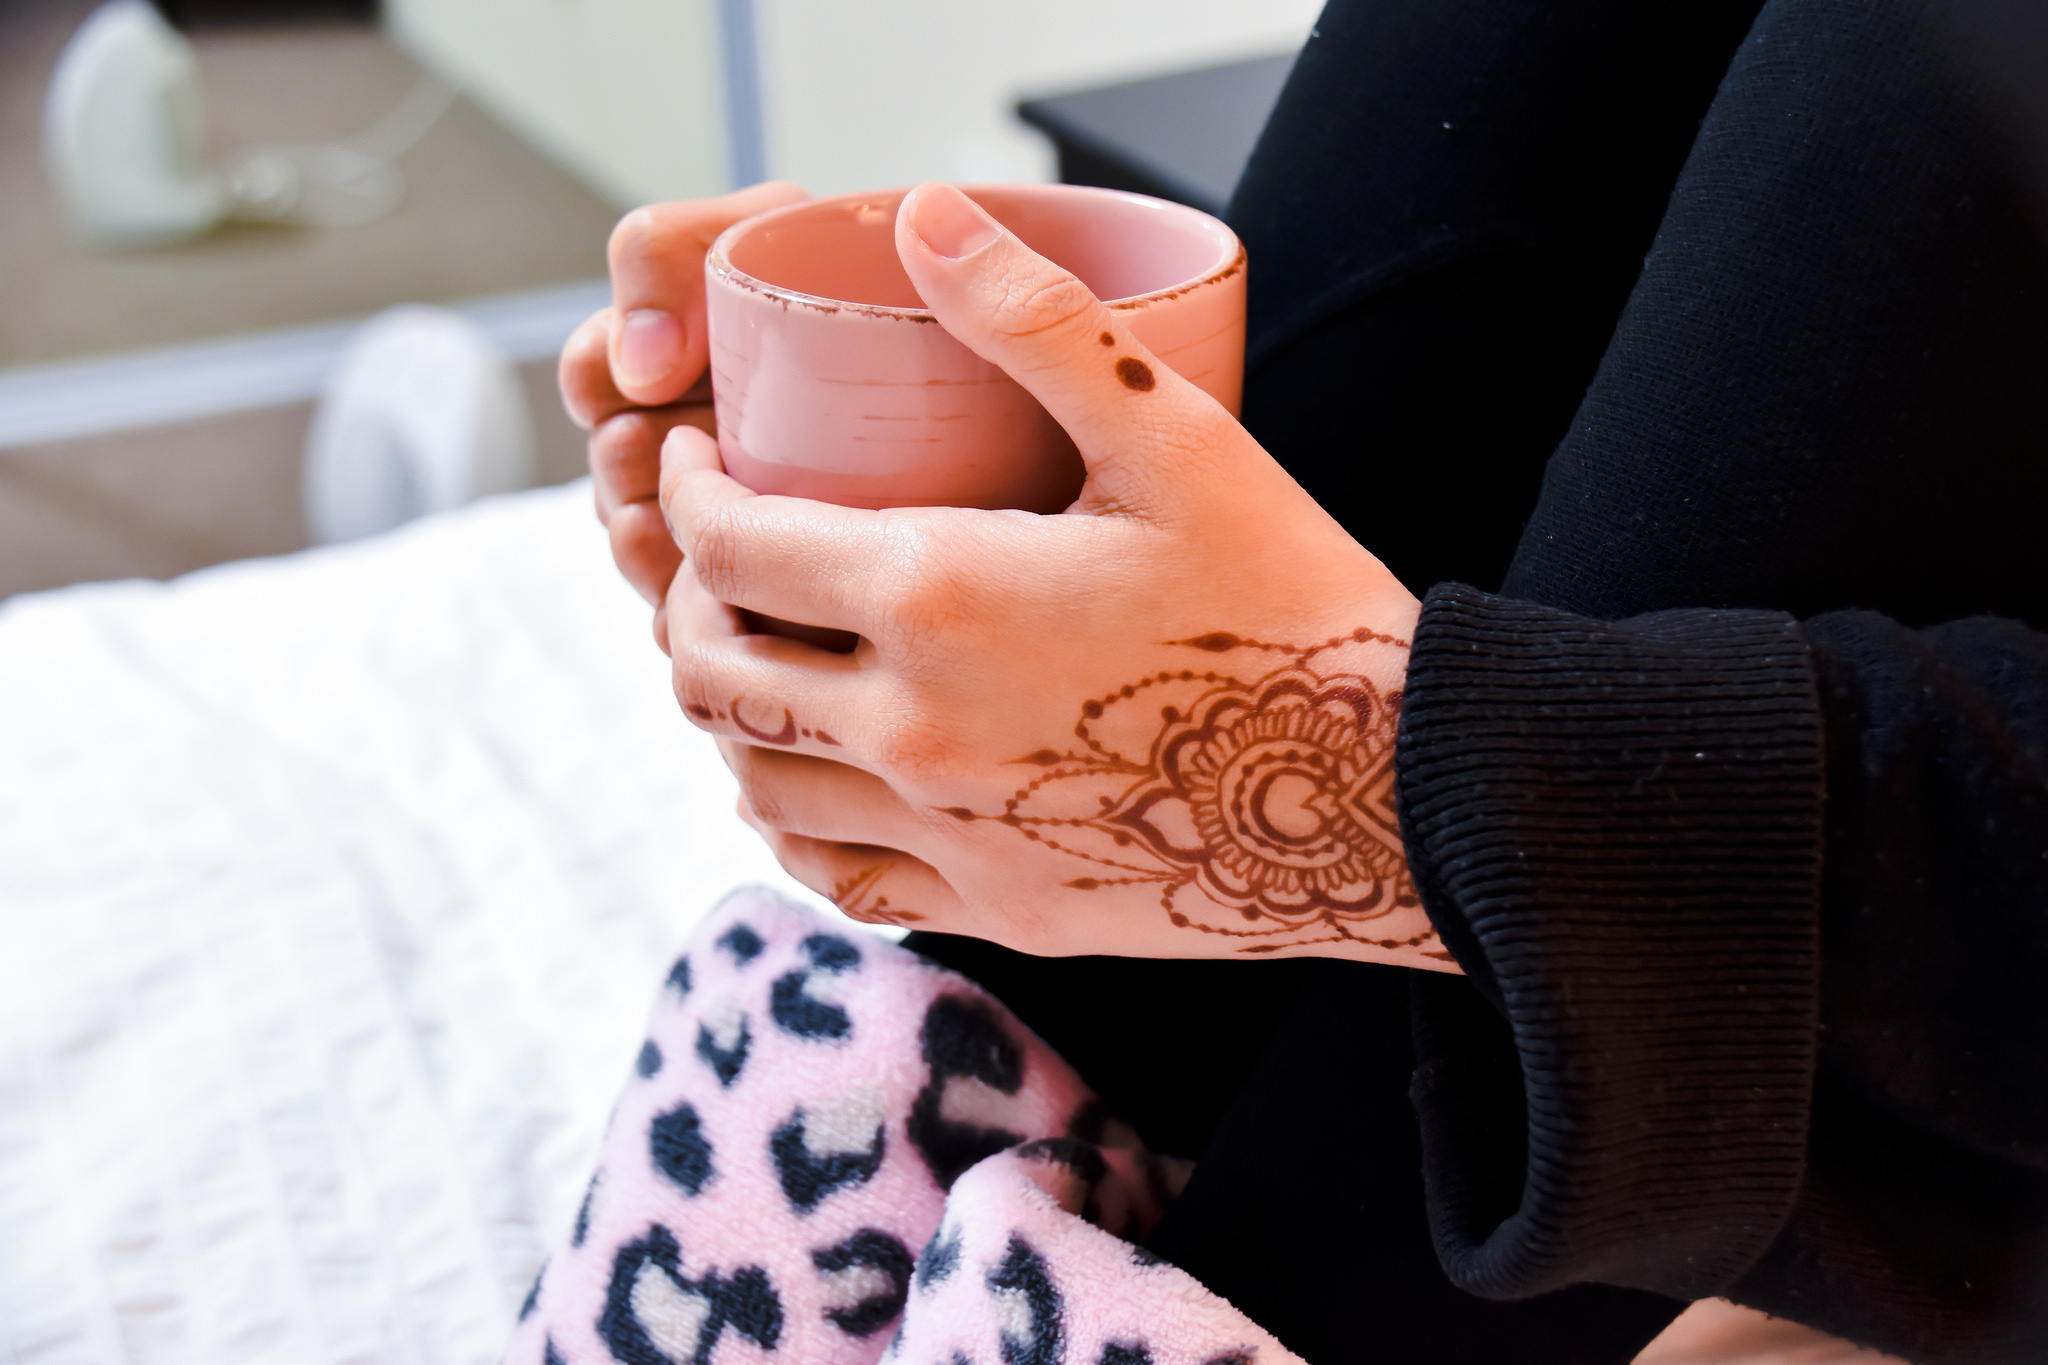 Khennaartist - HENNA AFTERCARE: Hey guys I did this henna design on her my  friend other day during @muslimshoppingfest show 2019. Henna cones:  @aminamalikhenna Henna inspiration: @khairhenna Henna aftercare spray:  @redhenna Thank